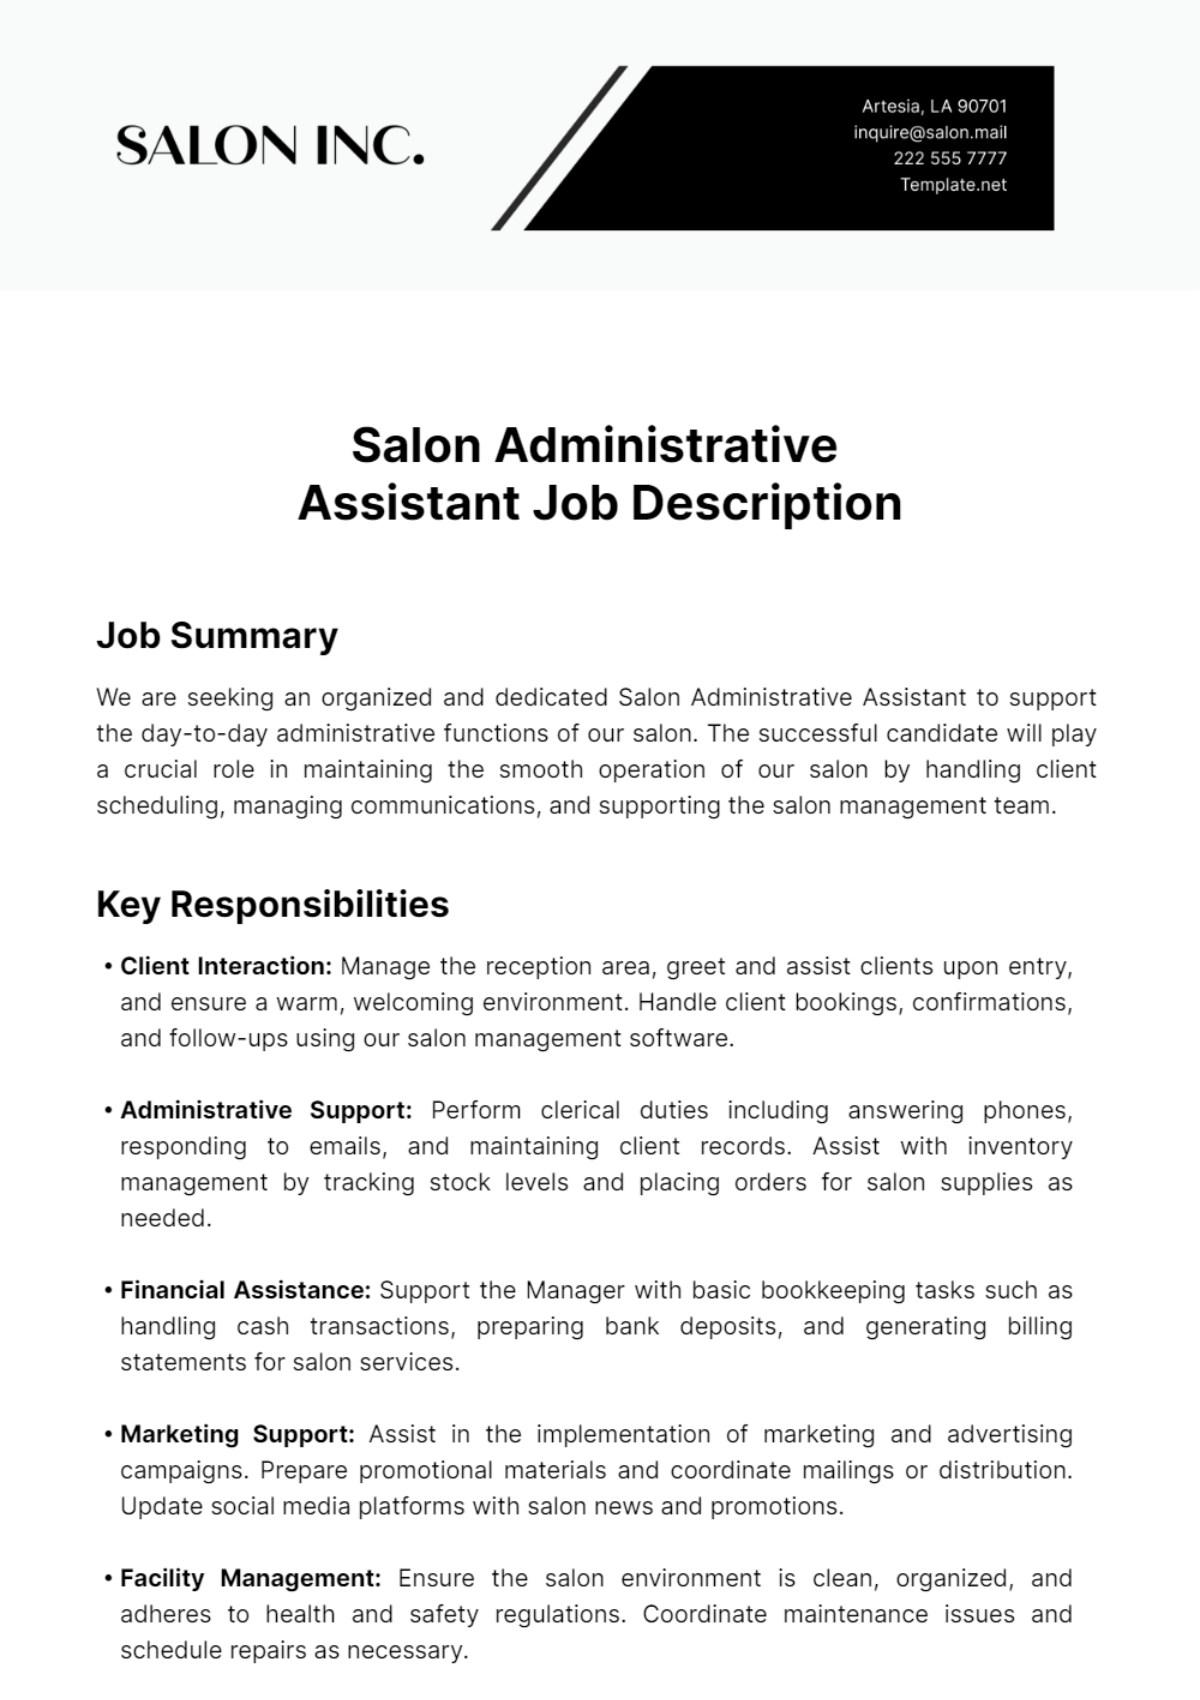 Salon Administrative Assistant Job Description Template